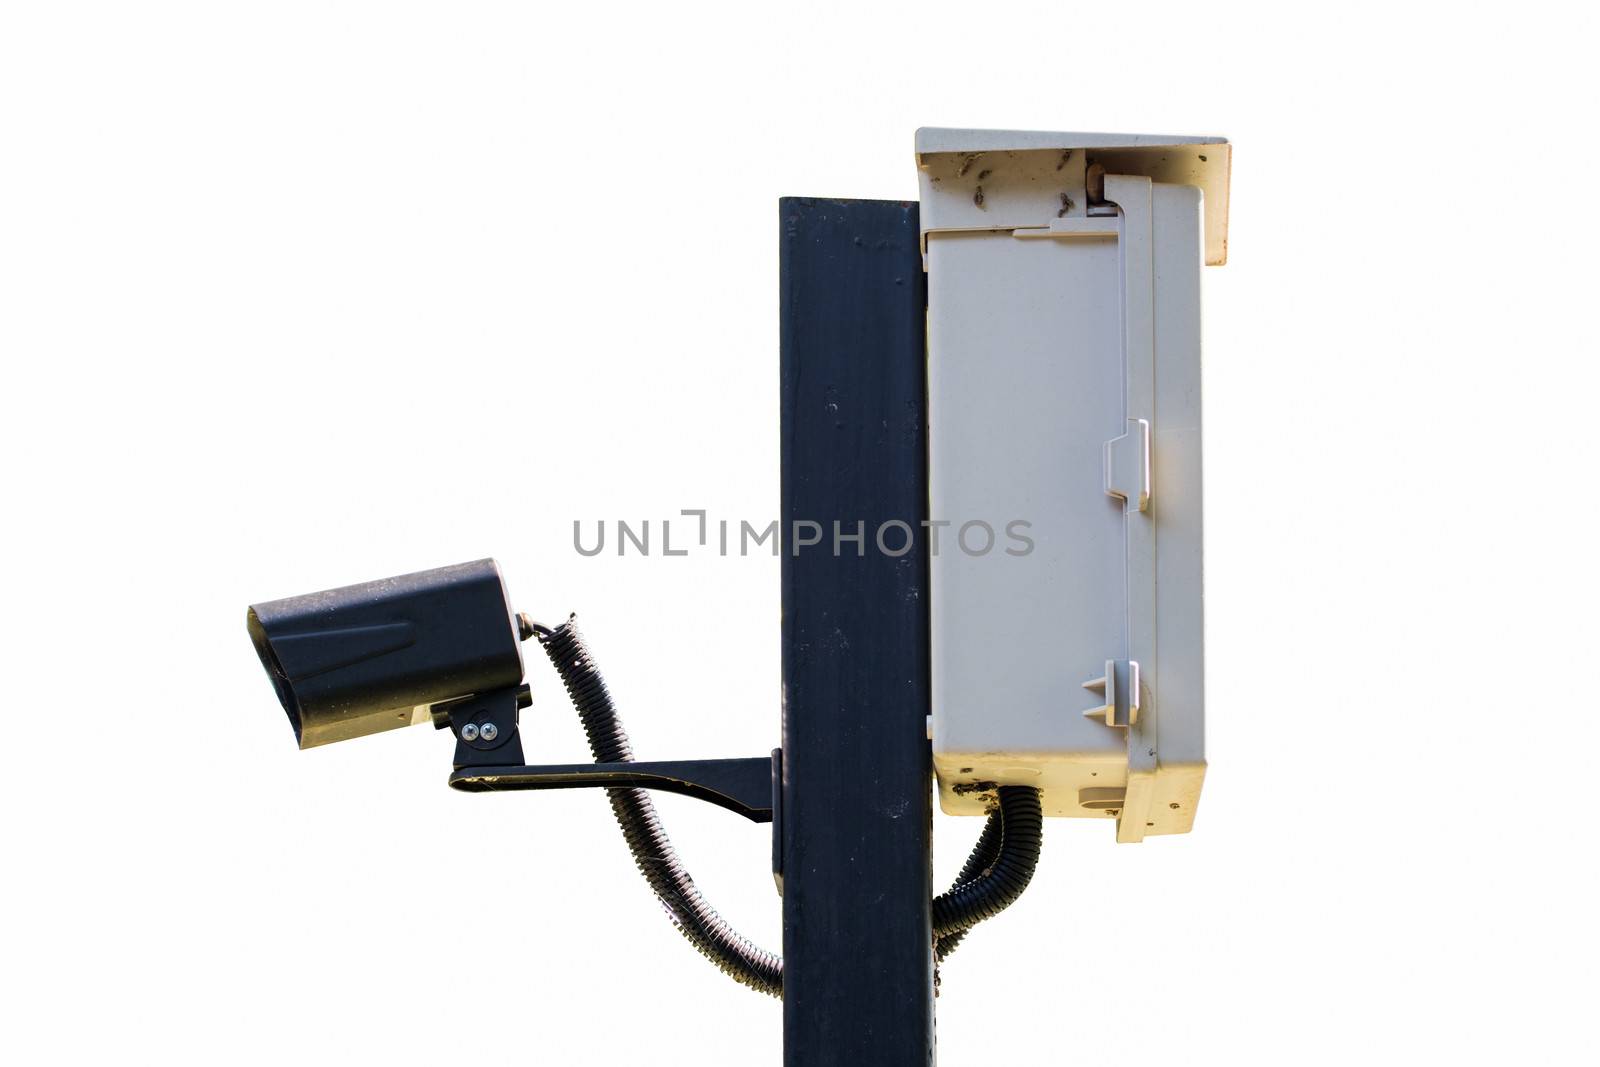 security CCTV camera isolate on white background